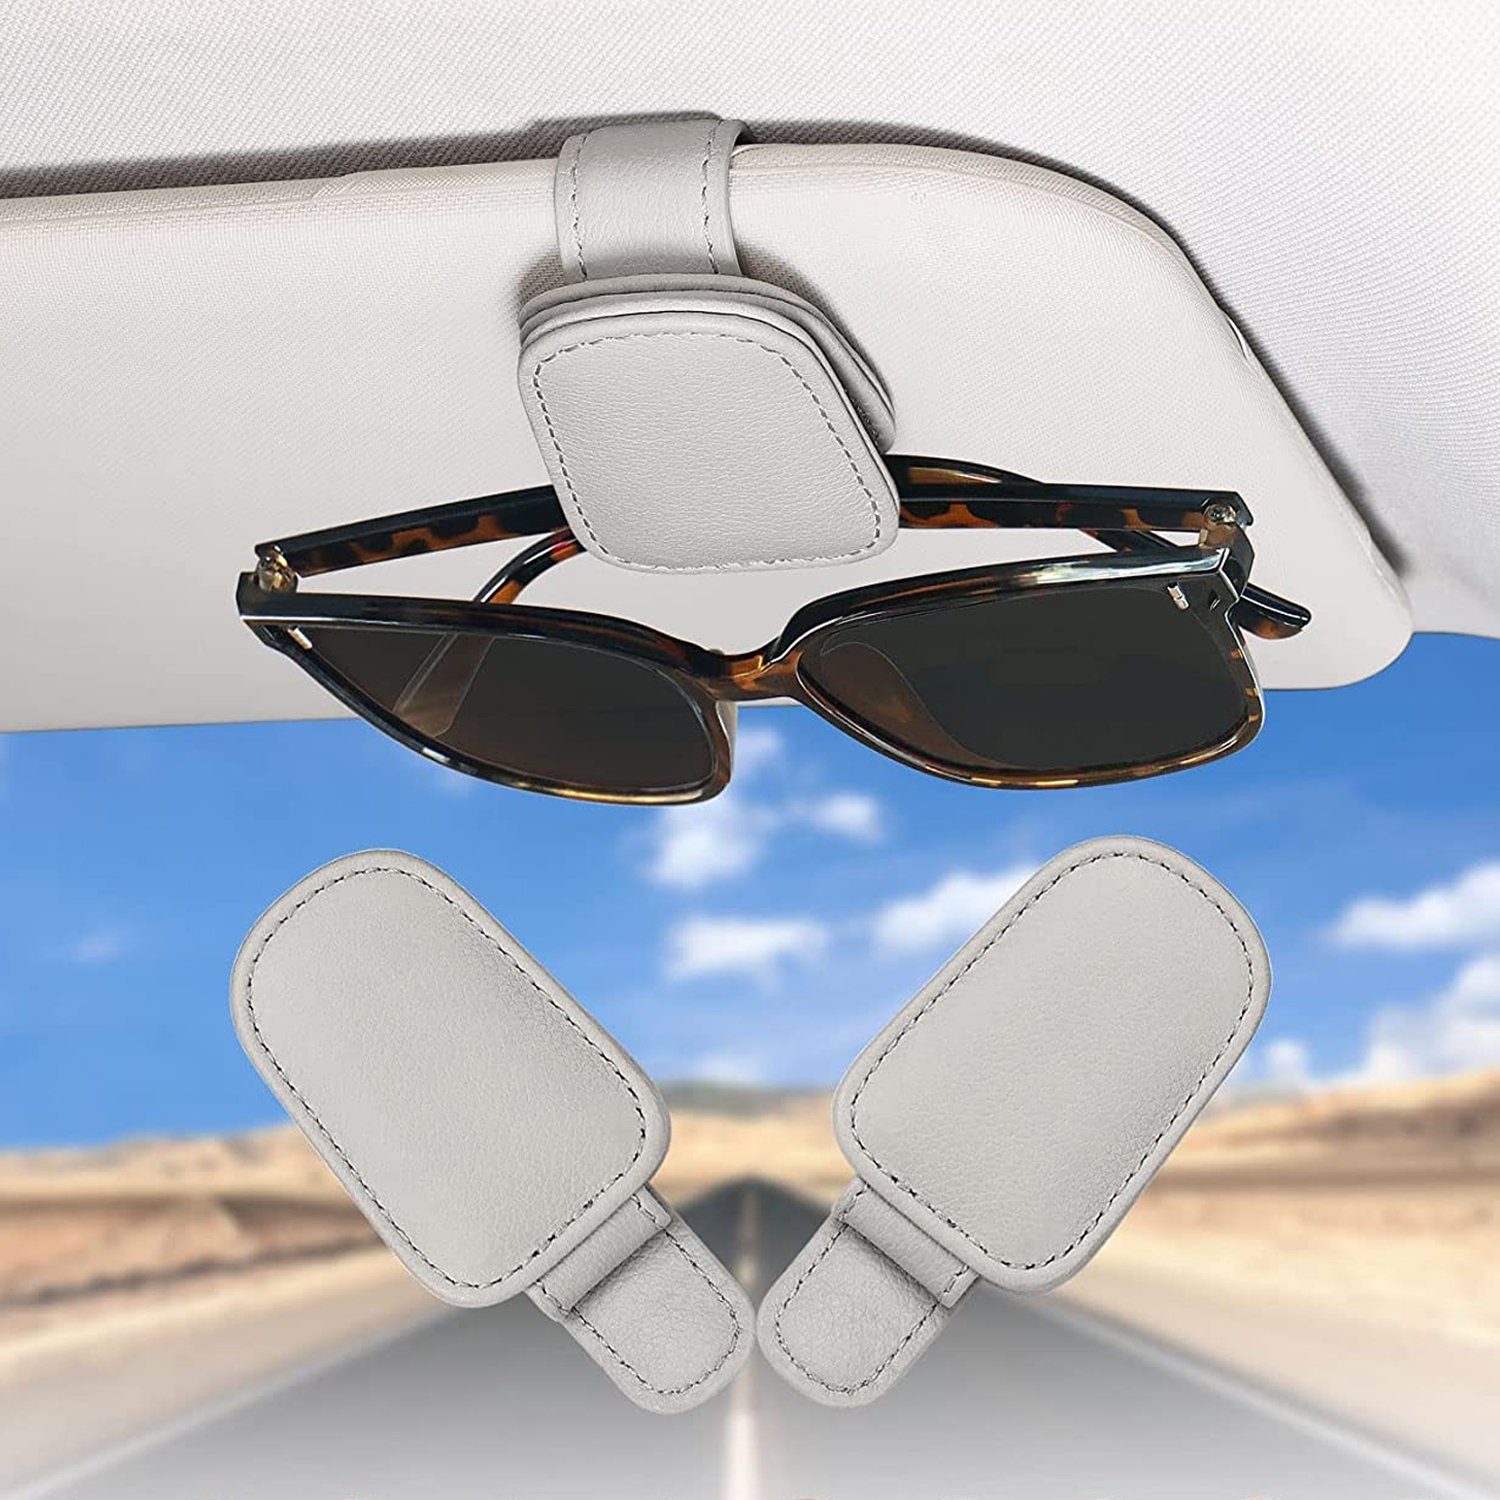 NUODWELL Autosonnenschutz 2 Pack Brillenhalter Auto Sonnenblende, Visier  Sonnenbrillenhalterung